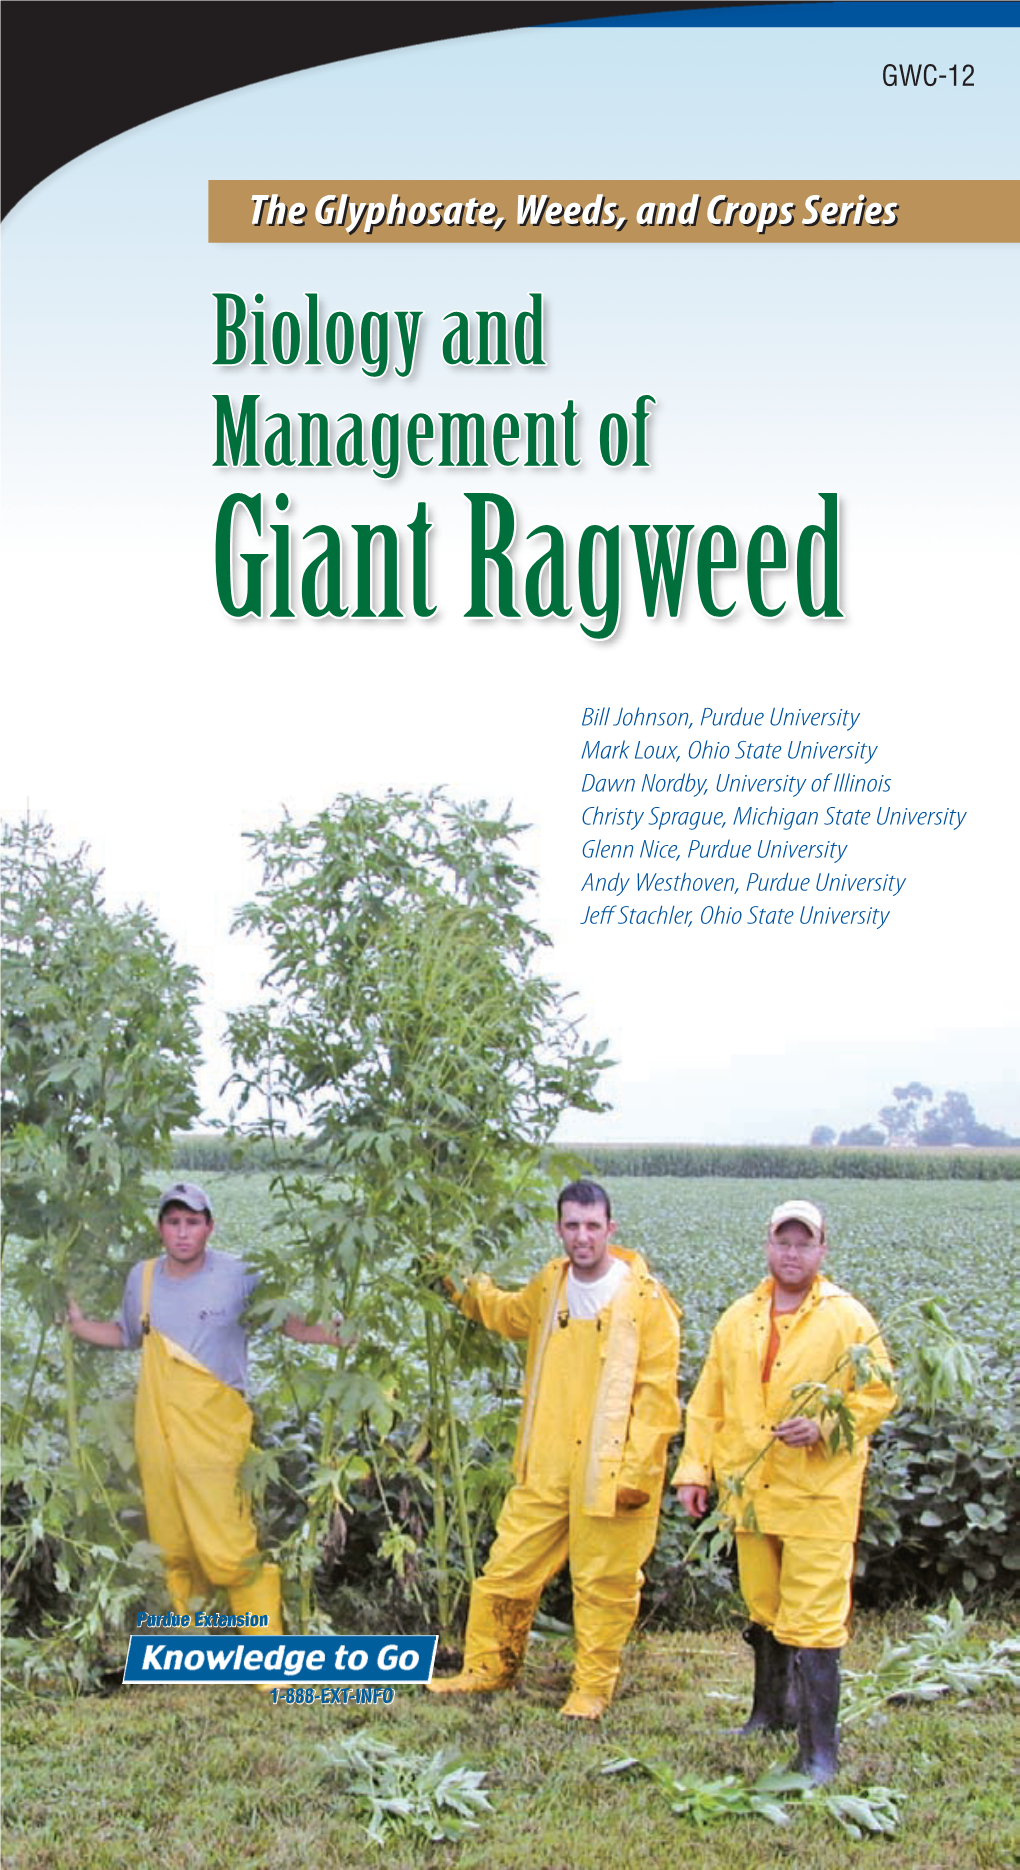 Giant Ragweed